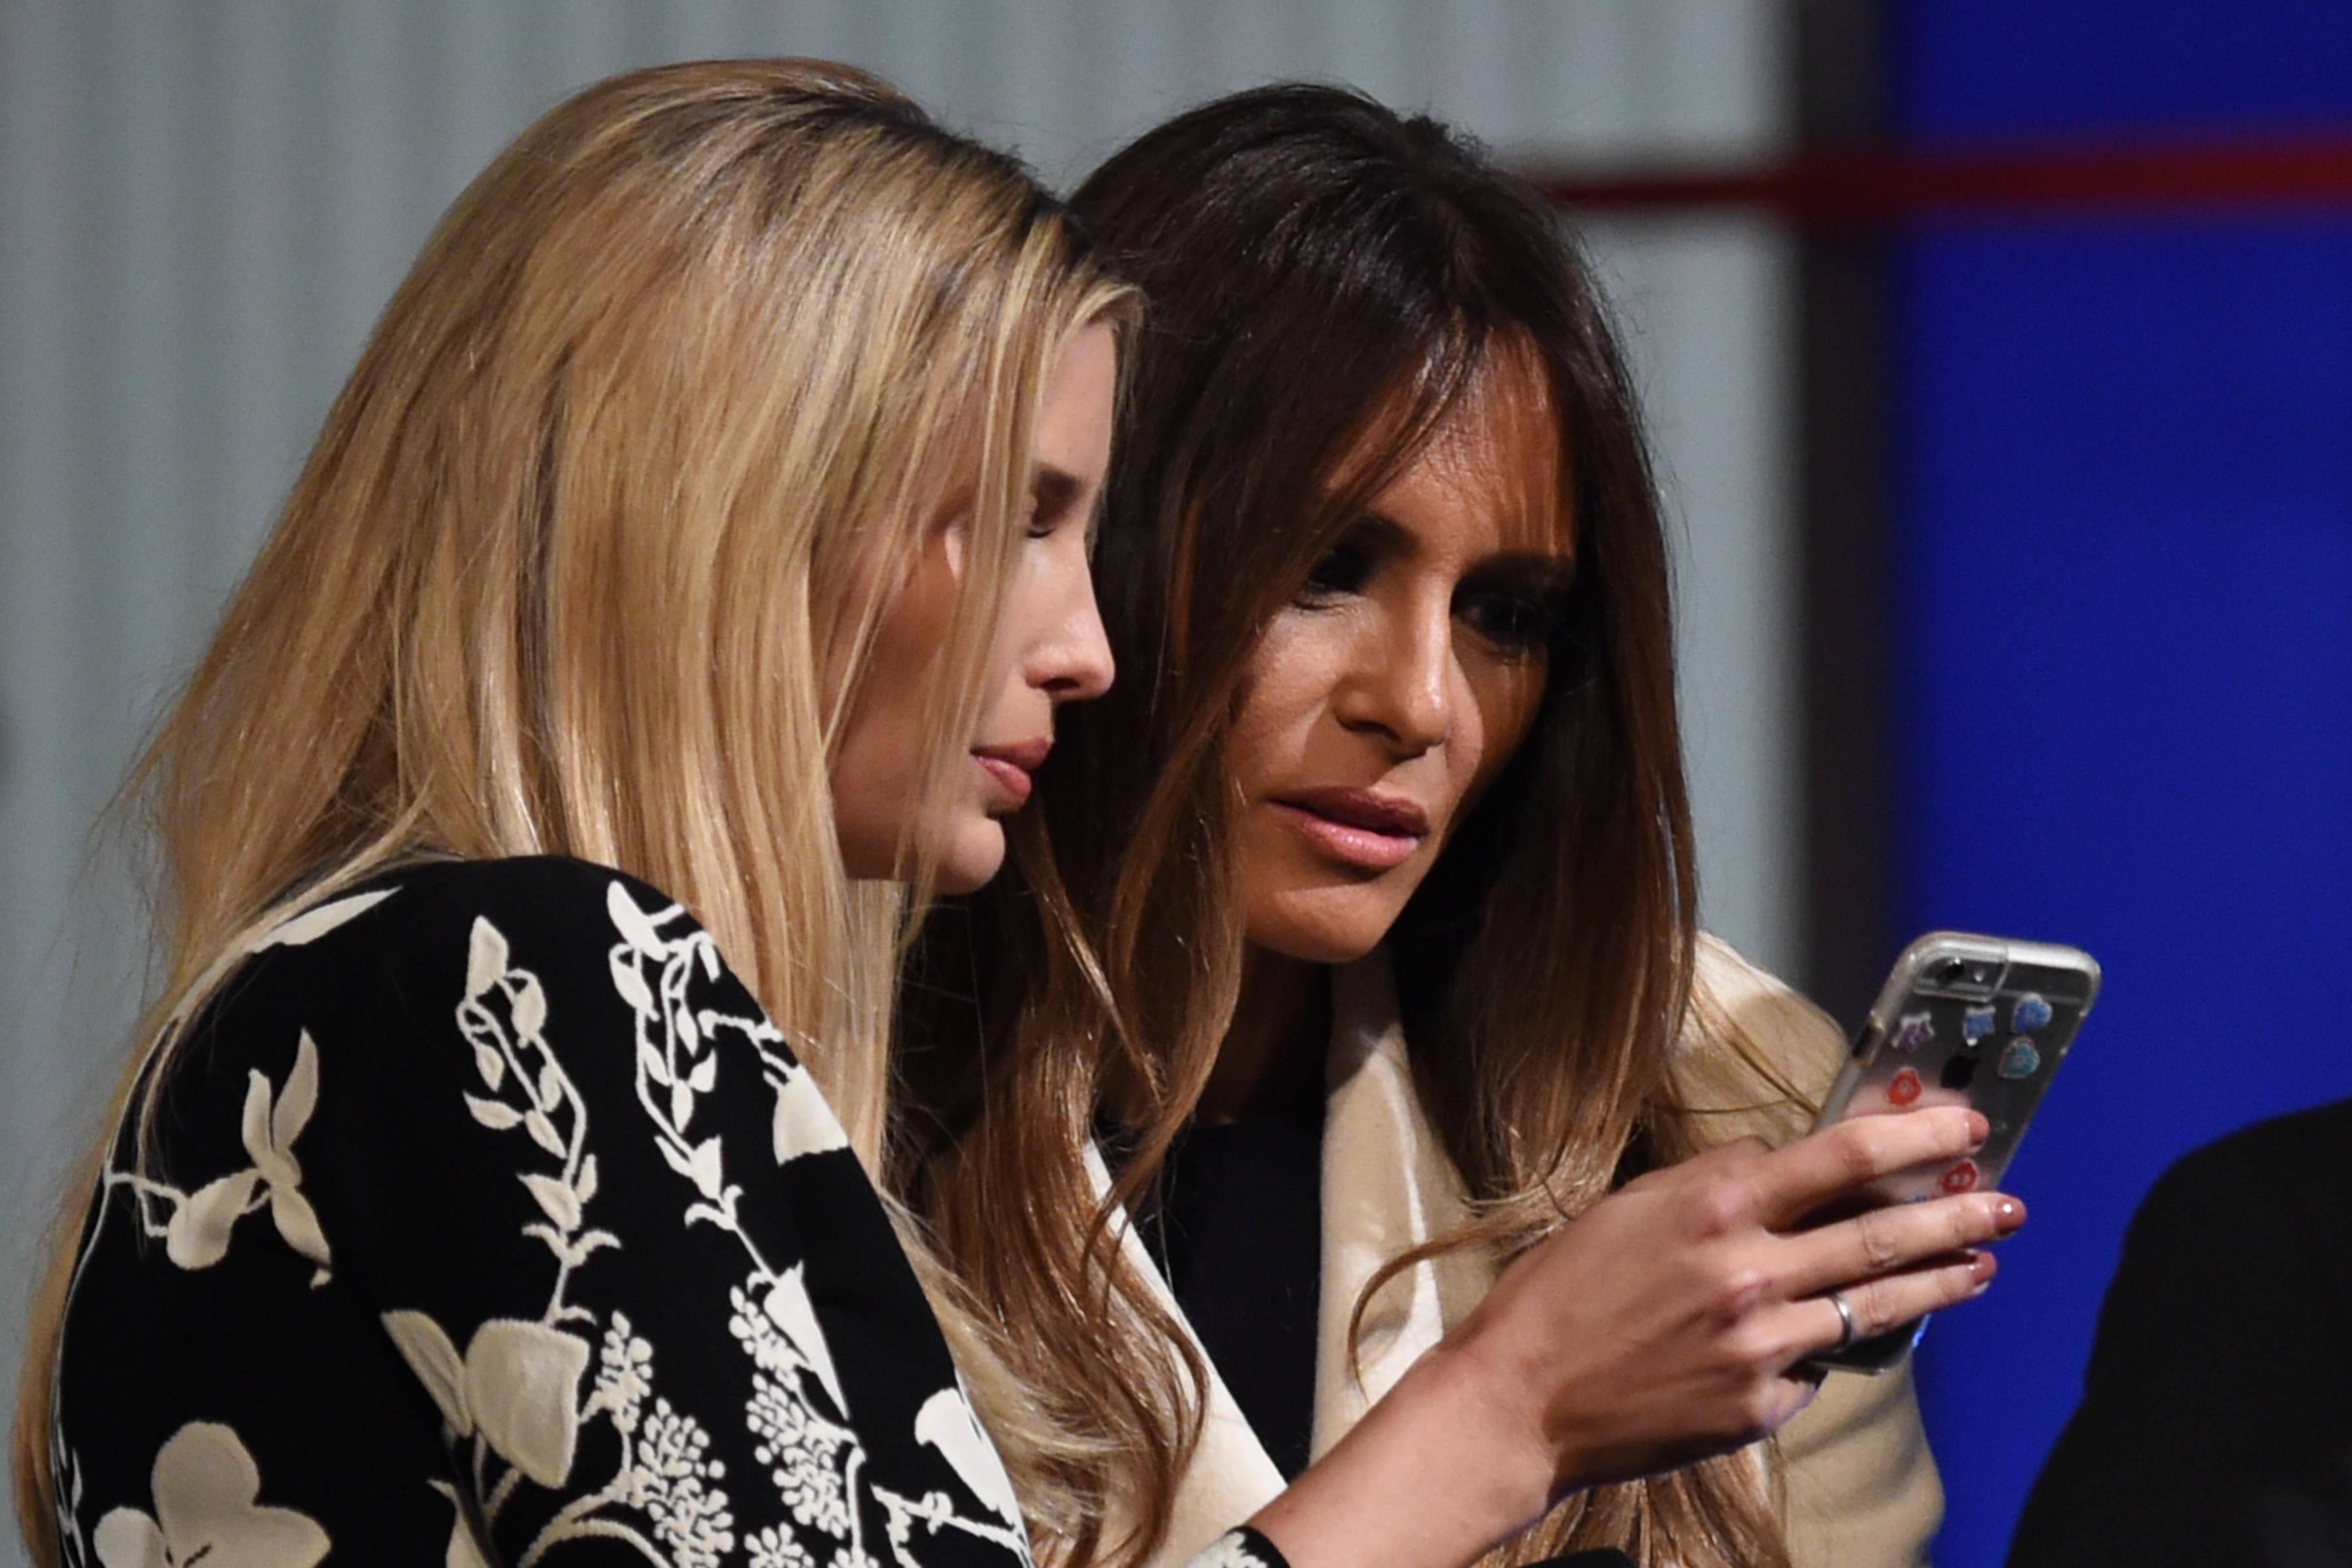 Ivanka and Melania Trump look at a smart phone after the Republican Presidential debate in Charleston, South Carolina on Jan. 14, 2016.